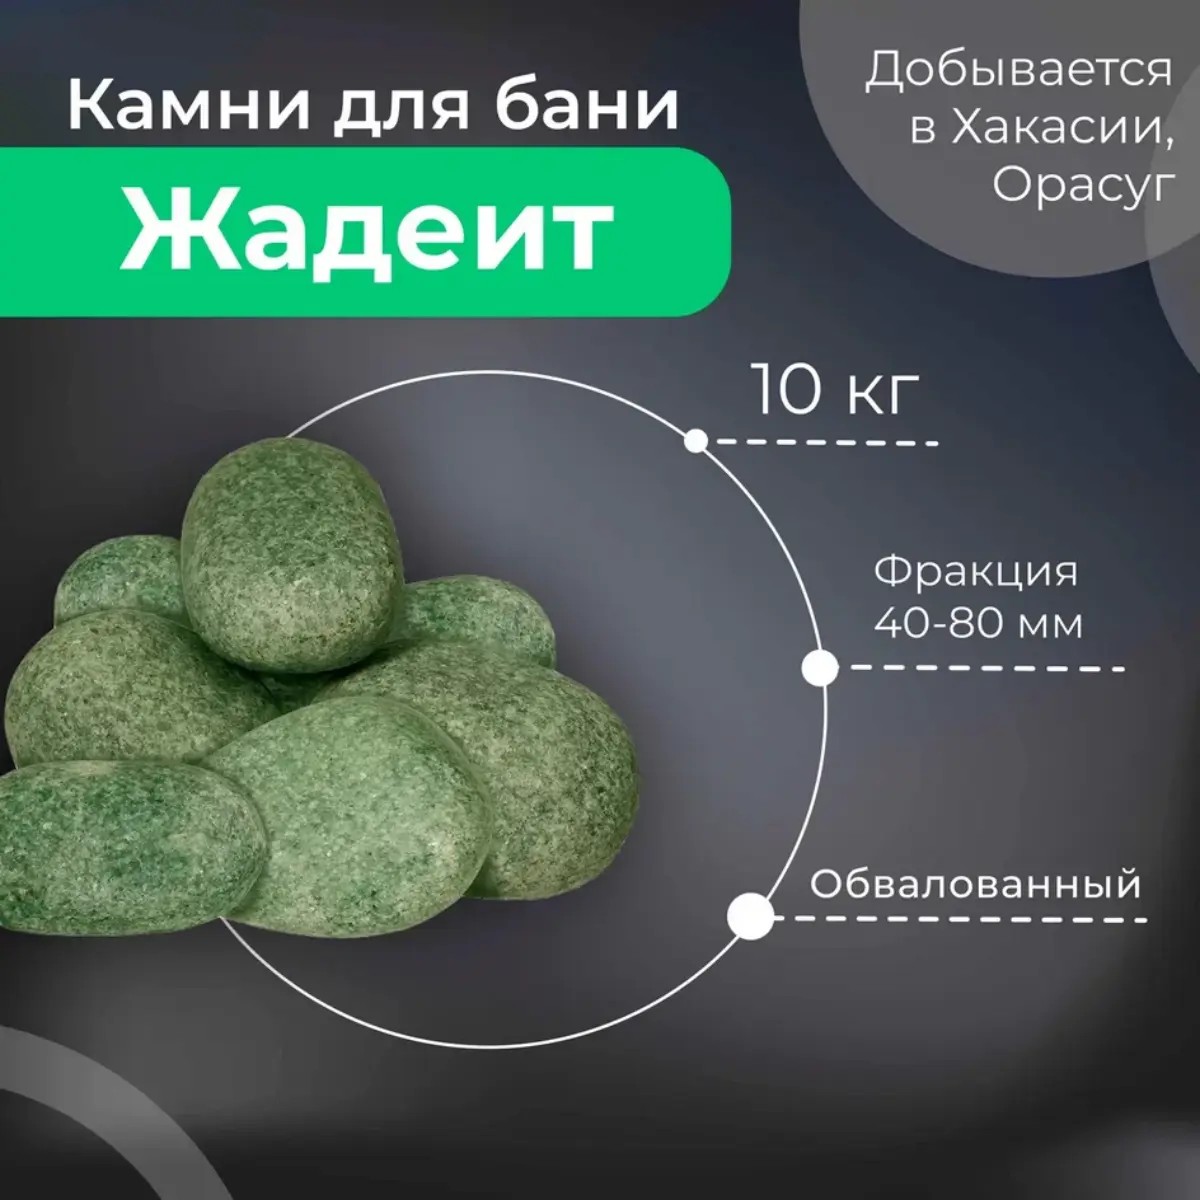 Камень Жадеит обвалованный (40-80 мм) 10 кг (Хакасия)